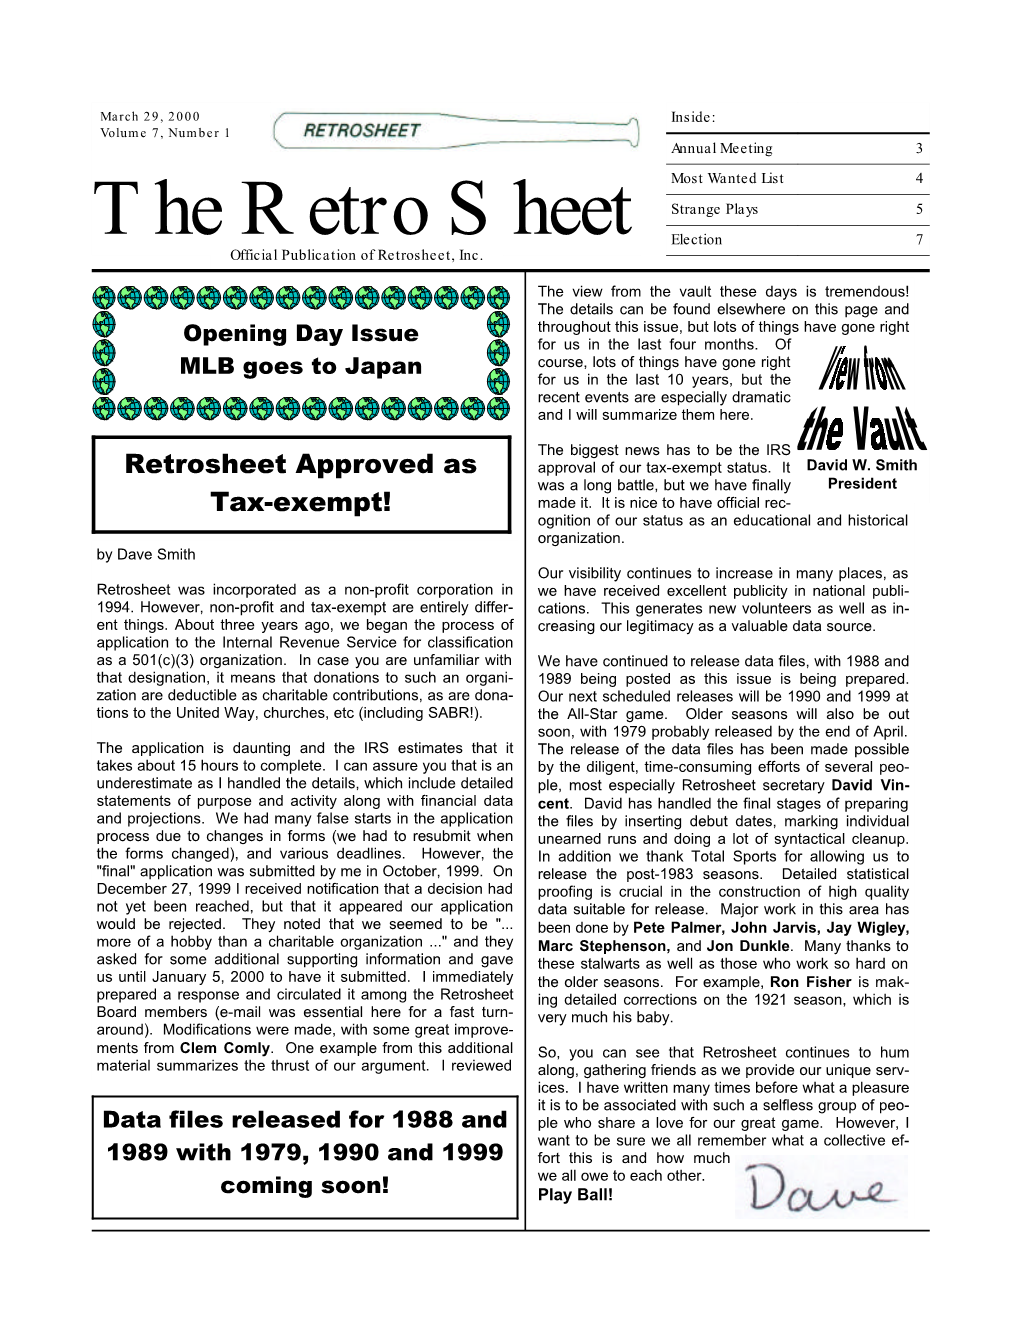 The Retro Sheet Election 7 Official Publication of Retrosheet, Inc